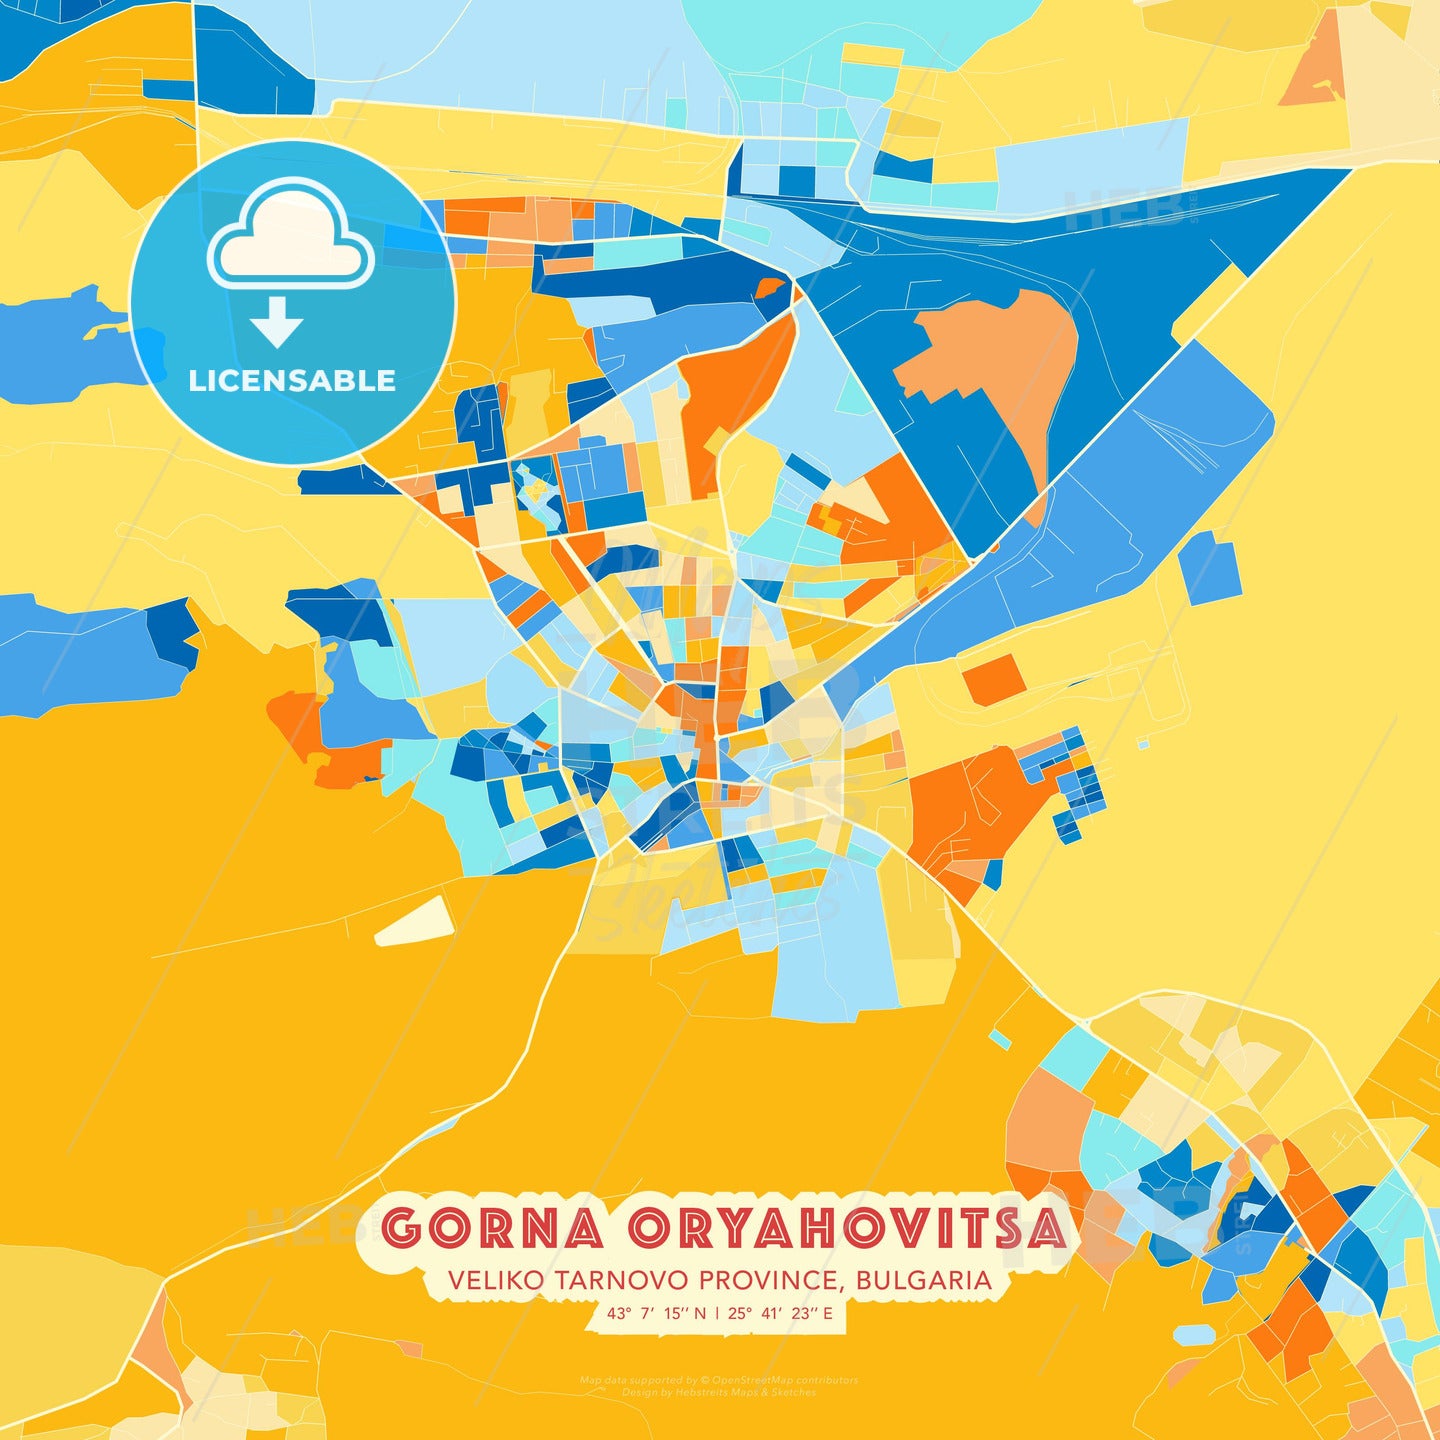 Gorna Oryahovitsa, Veliko Tarnovo Province, Bulgaria, map - HEBSTREITS Sketches